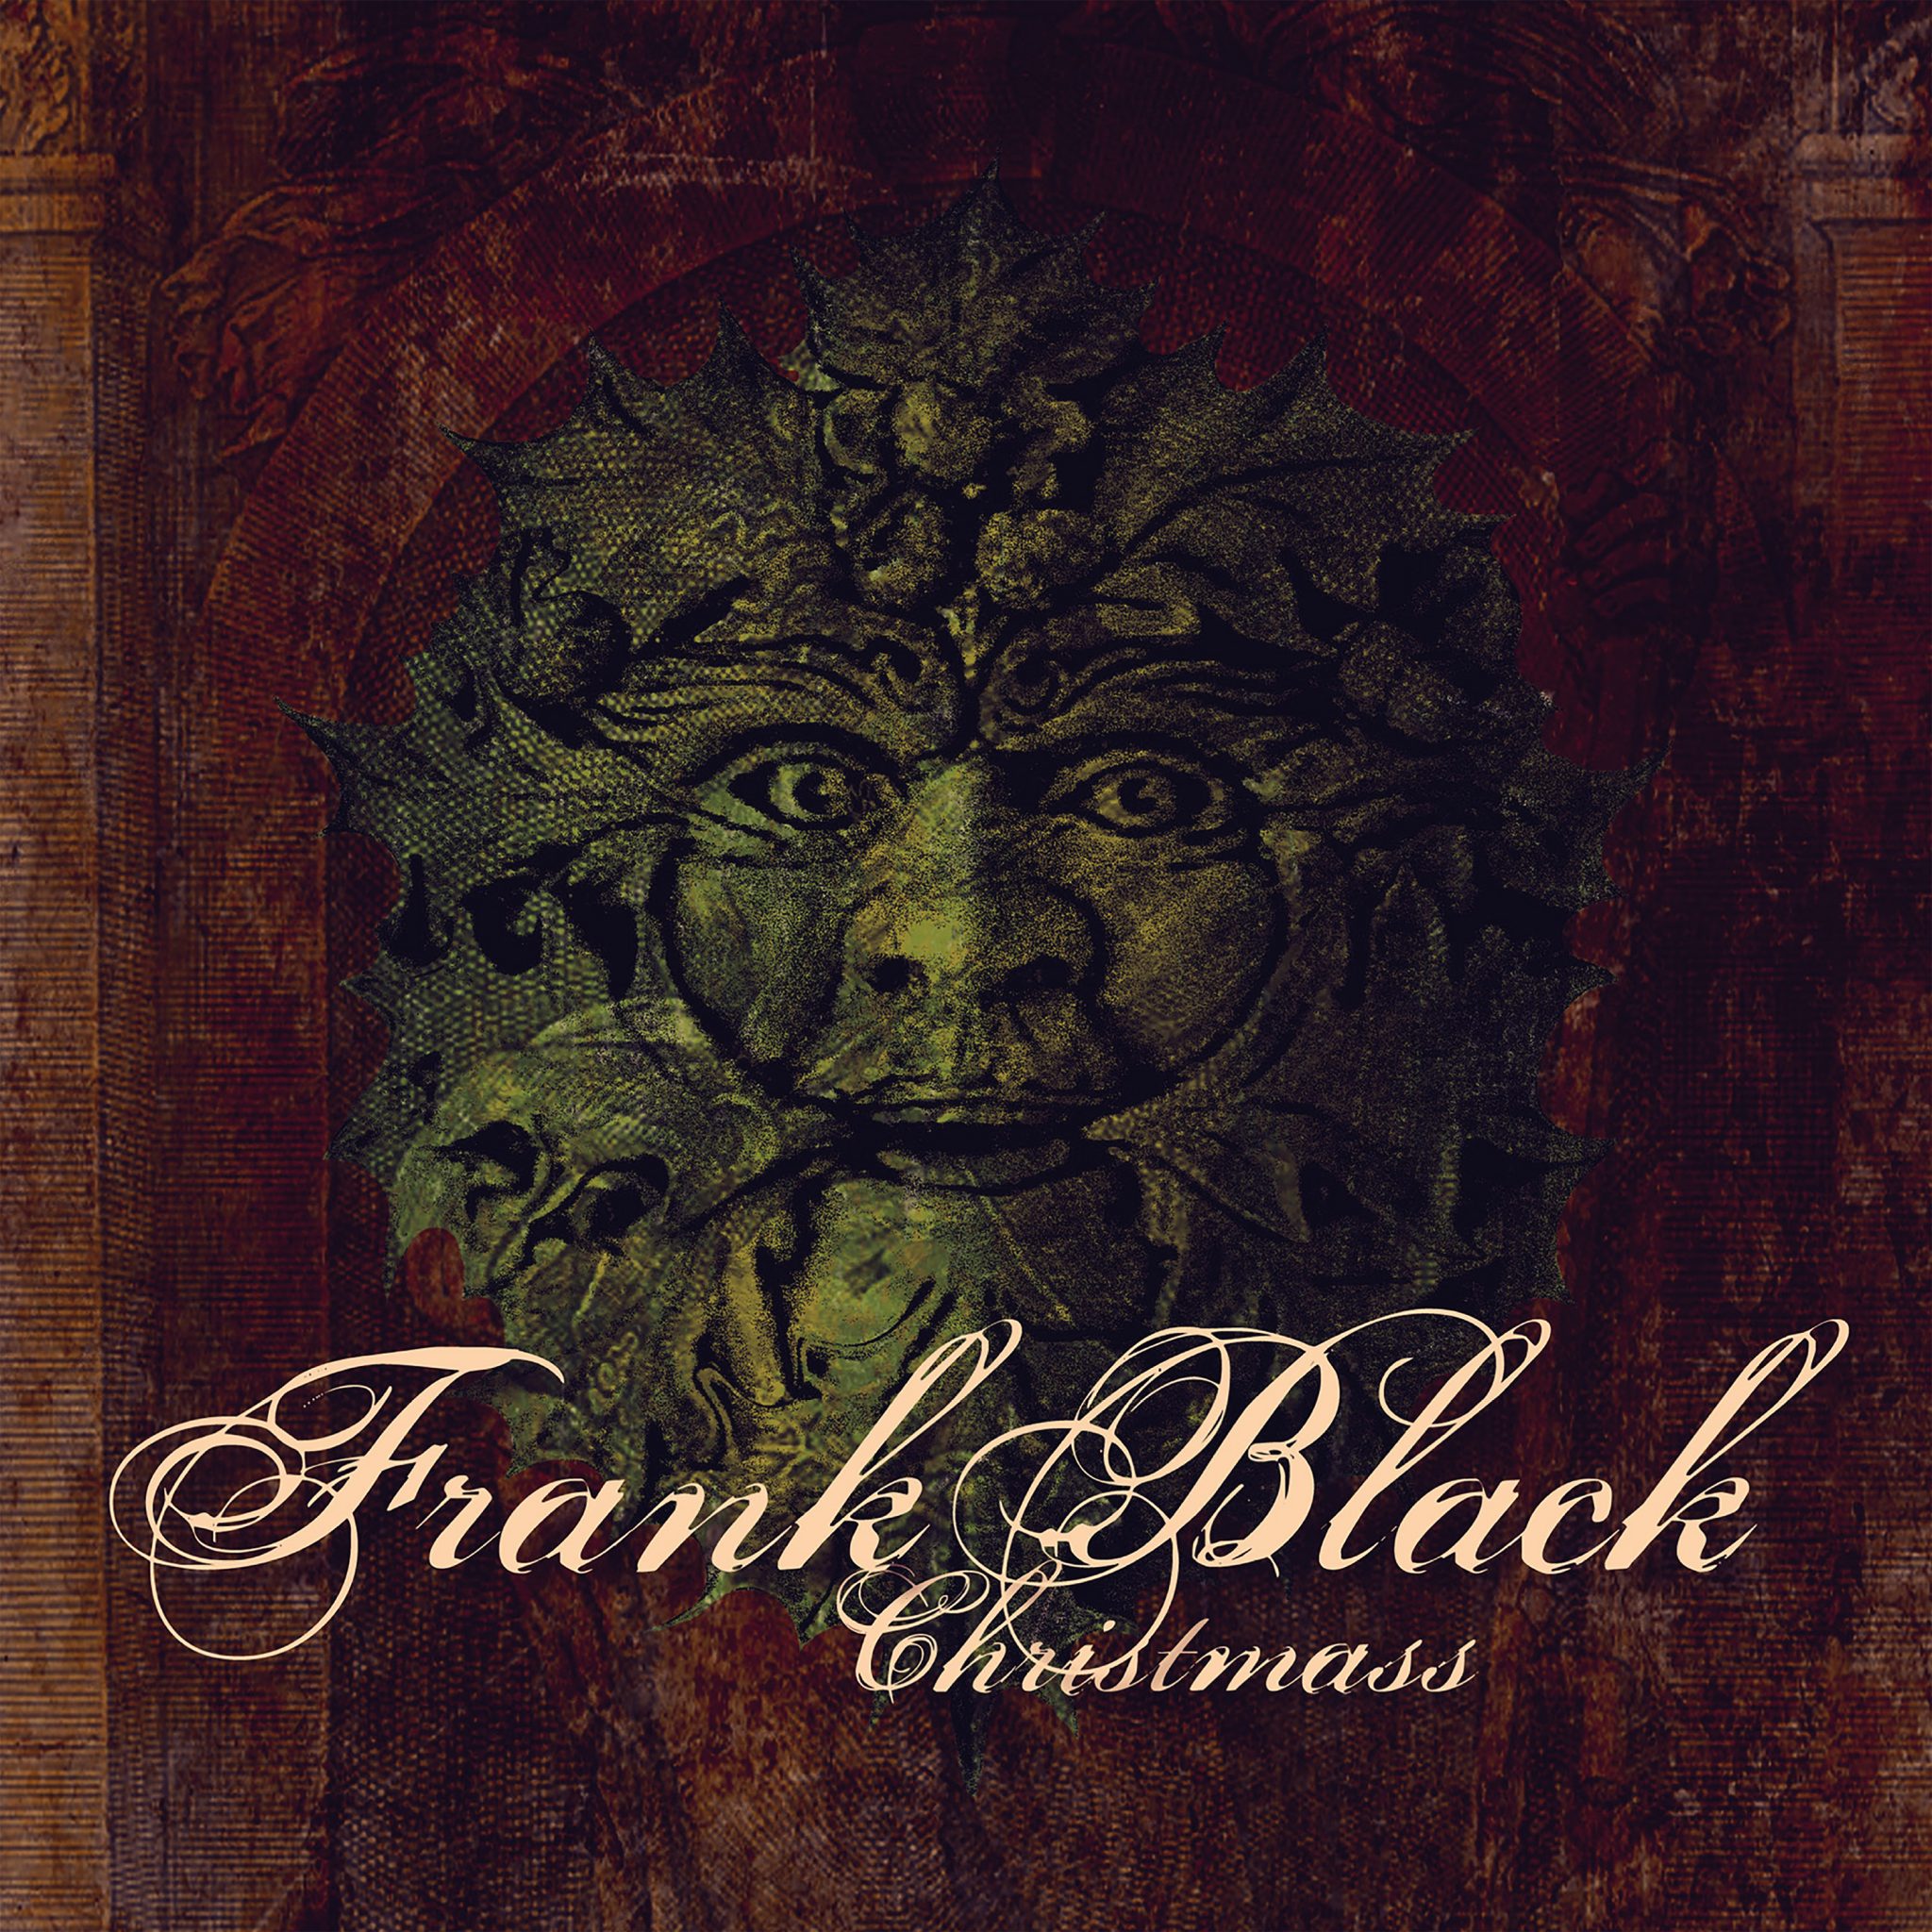 Frank Black / Black Francis Official deluxe vinyl album reissue series